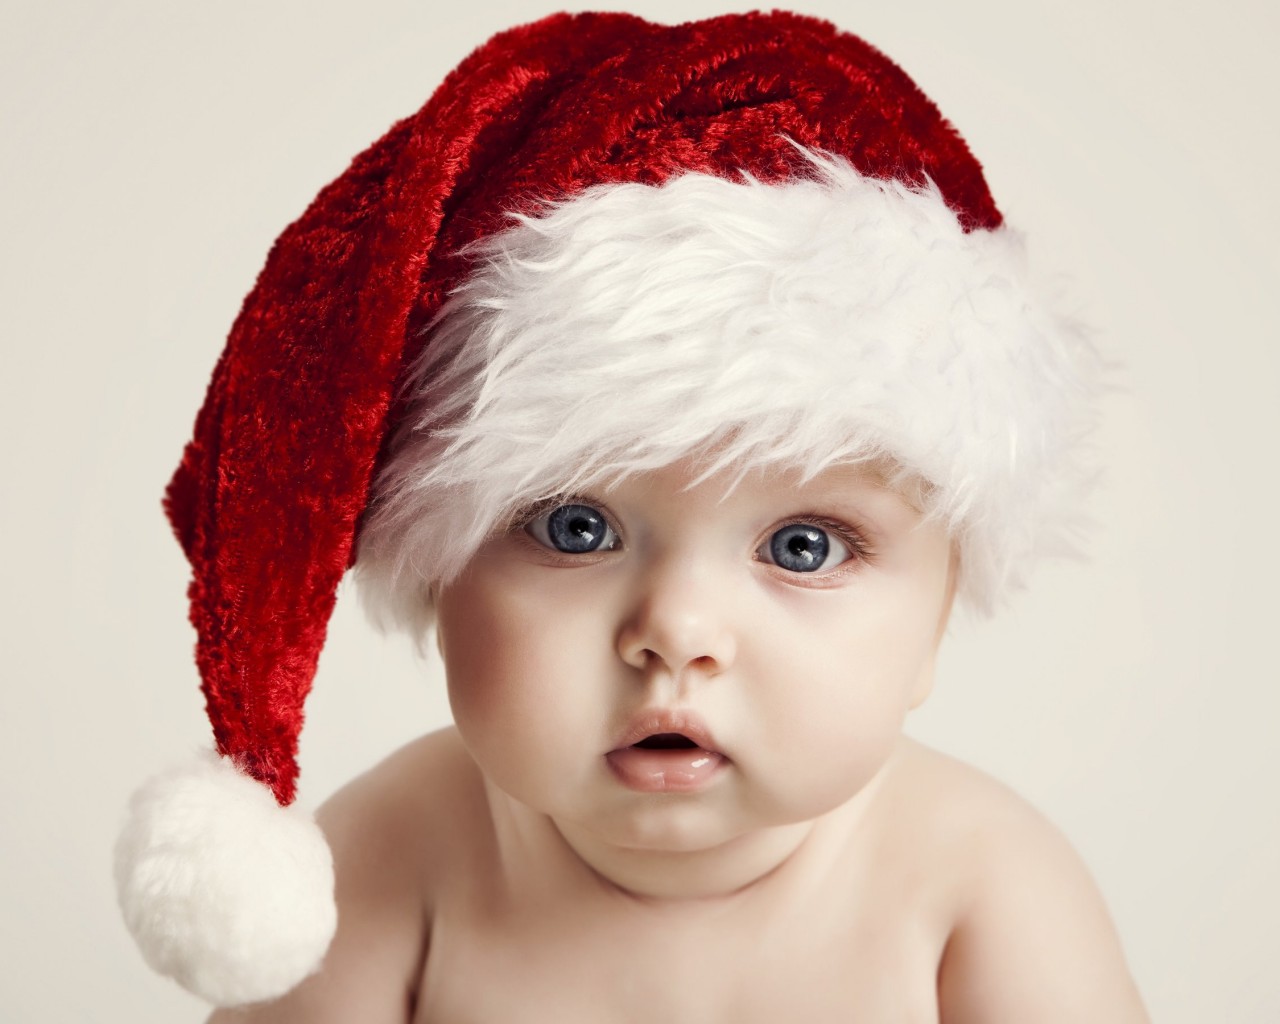 Santa Claus Baby Boy Wallpaper for Desktop 1280x1024